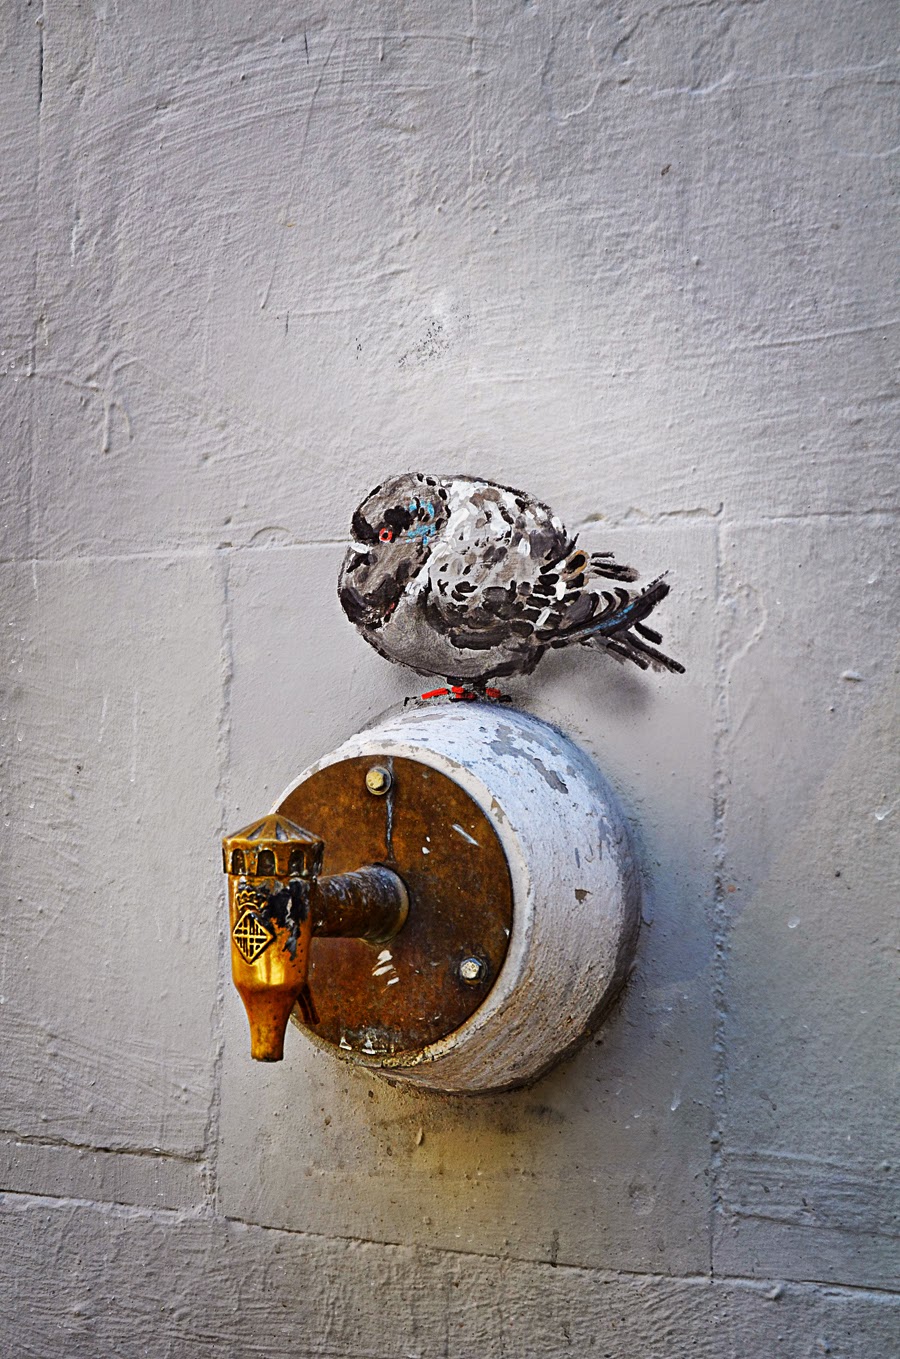 Pigeon graffiti on water tap in Barcelona